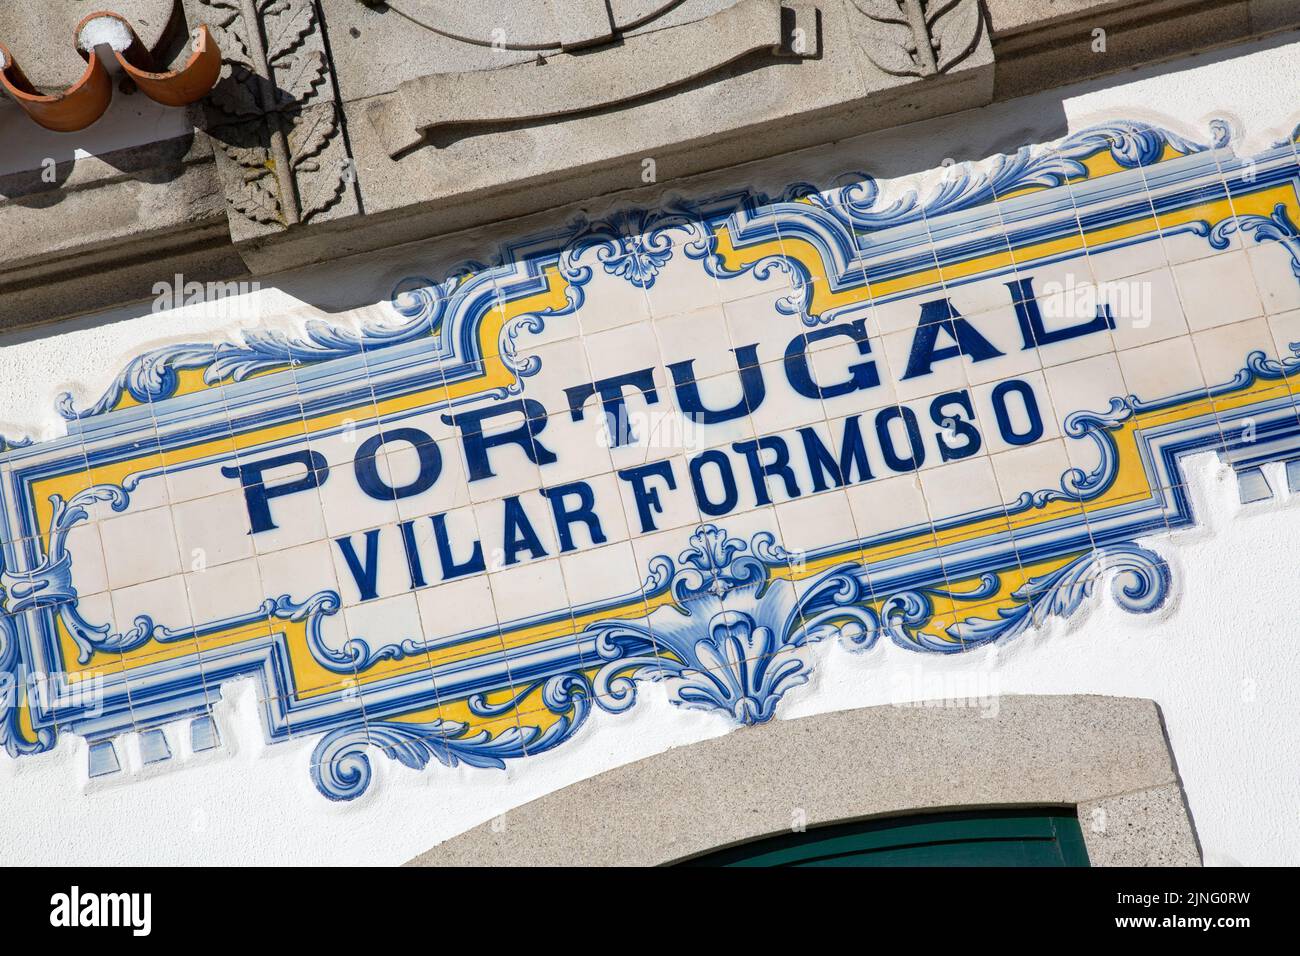 Vilar Formoso Tile Sign at Railway Station; Portugal Stock Photo